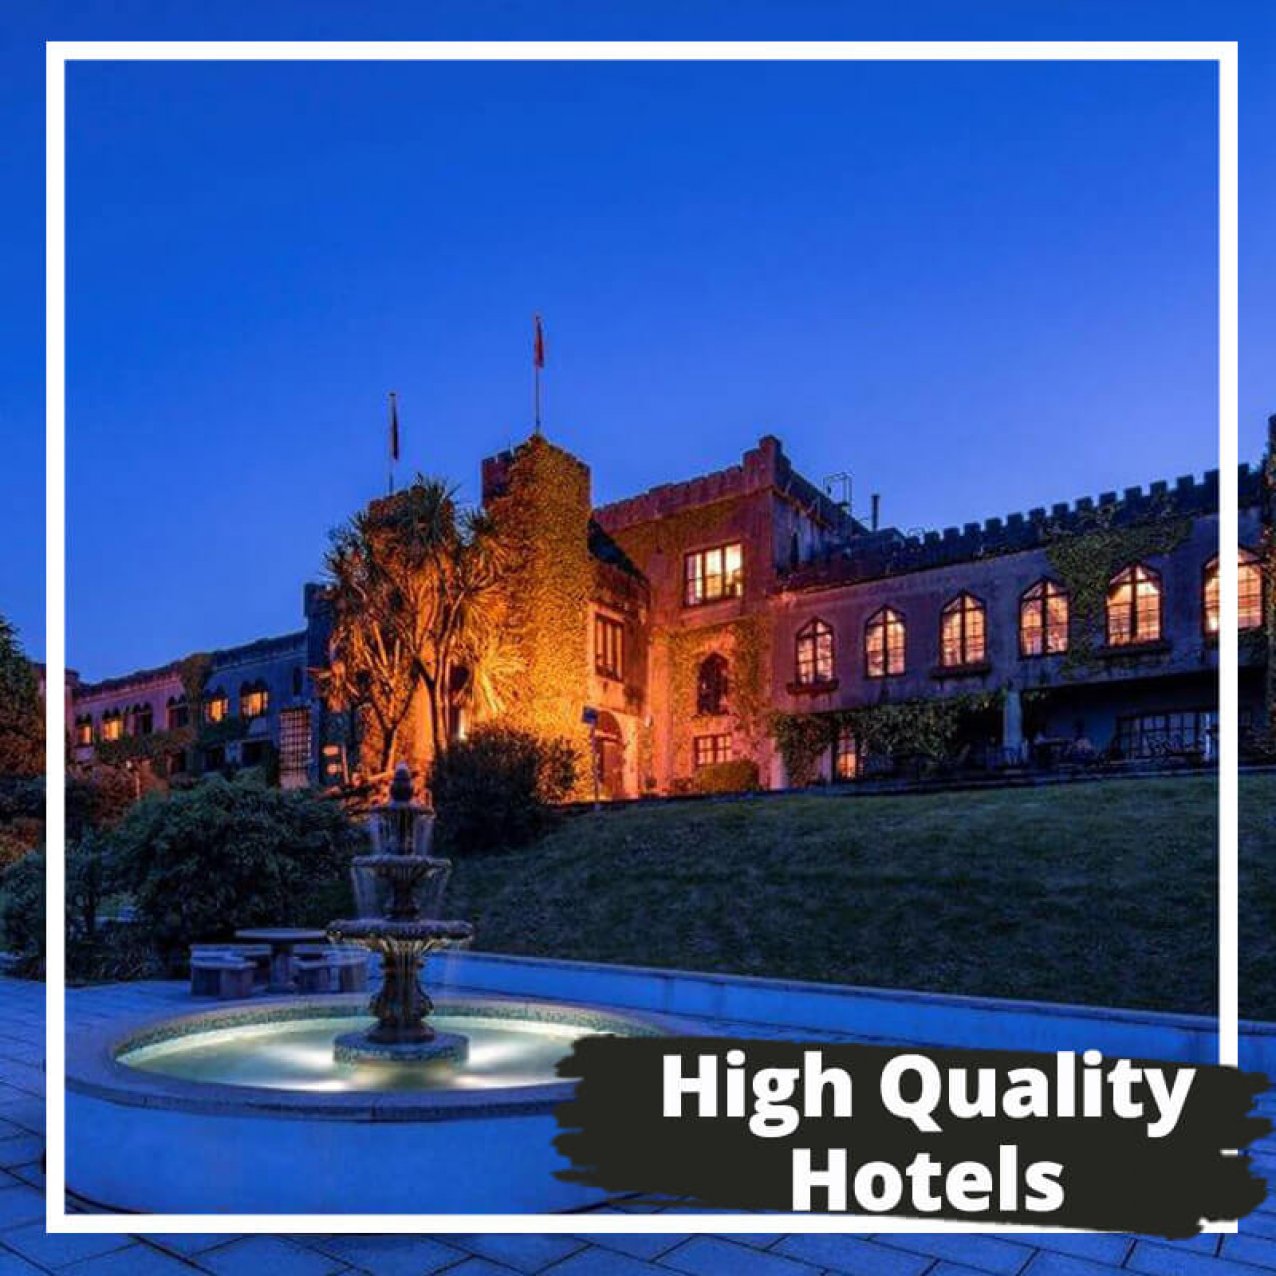 Abbeyglen Hotel in Ireland with high quality hotels